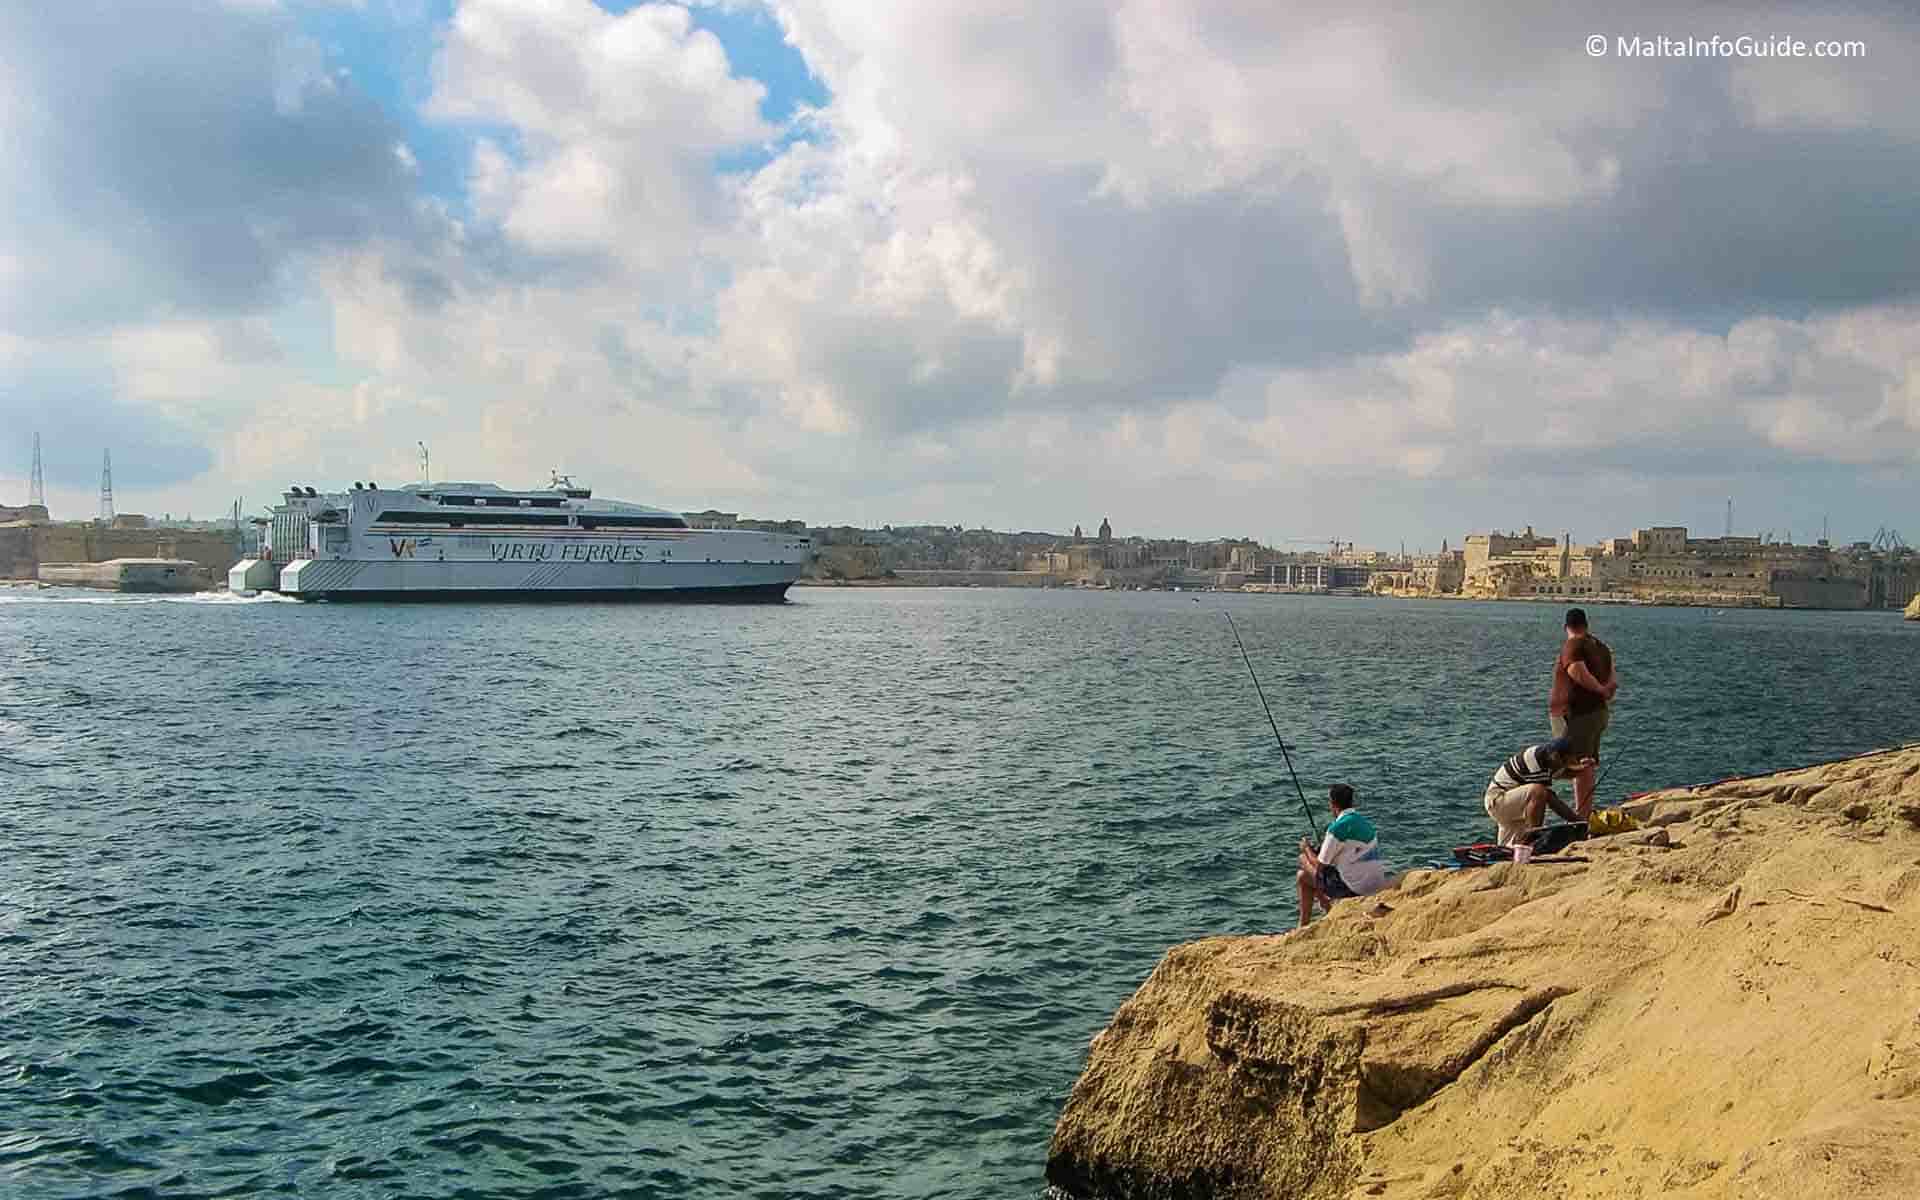 The Virtu Ferries Catamaran porting in Malta.